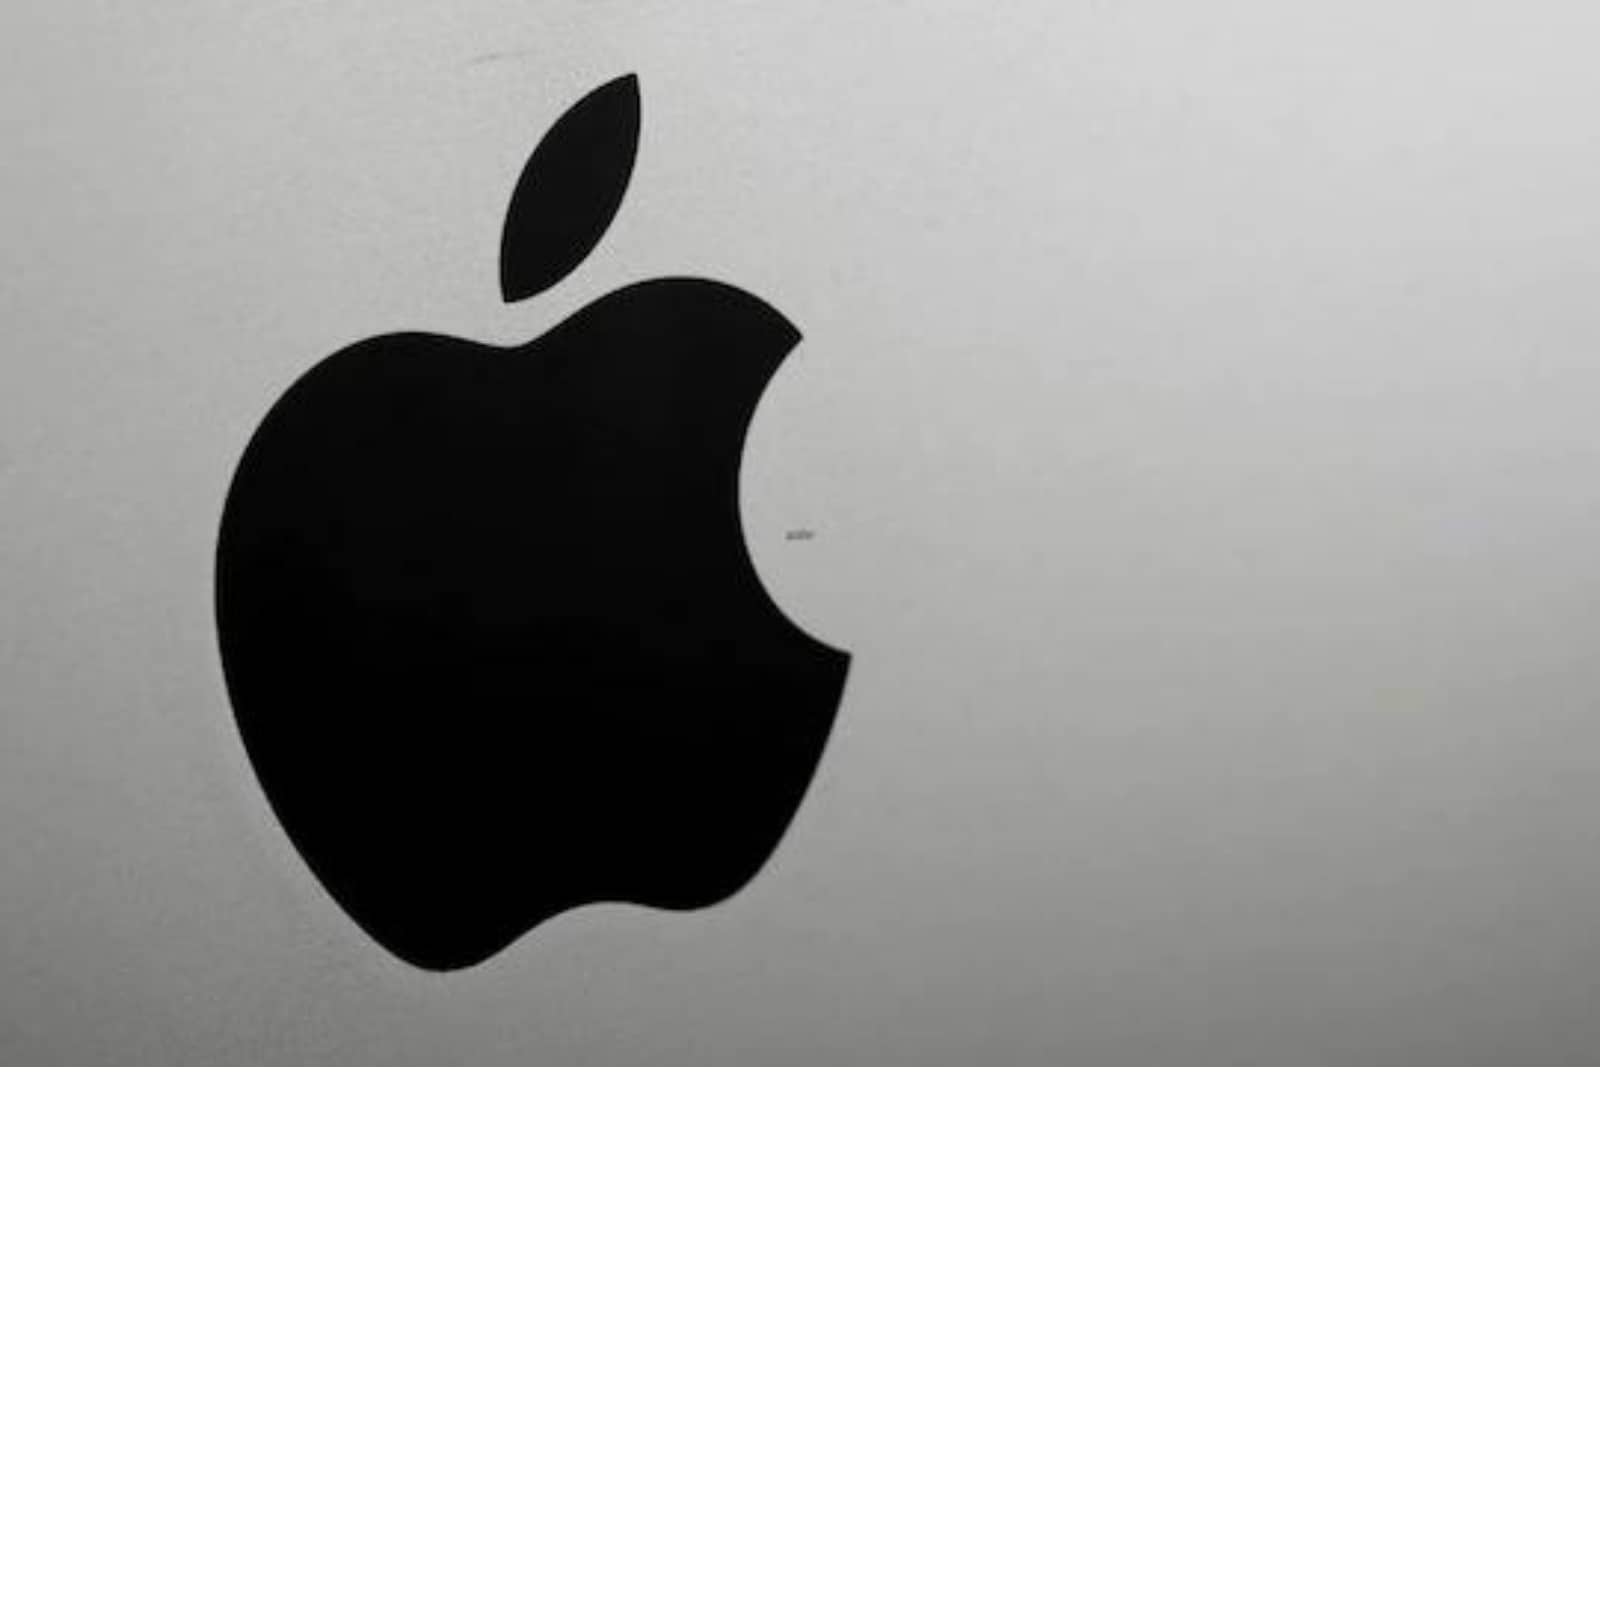 Designer Explains Why This Tech Giant's Logo is a Half-eaten Apple